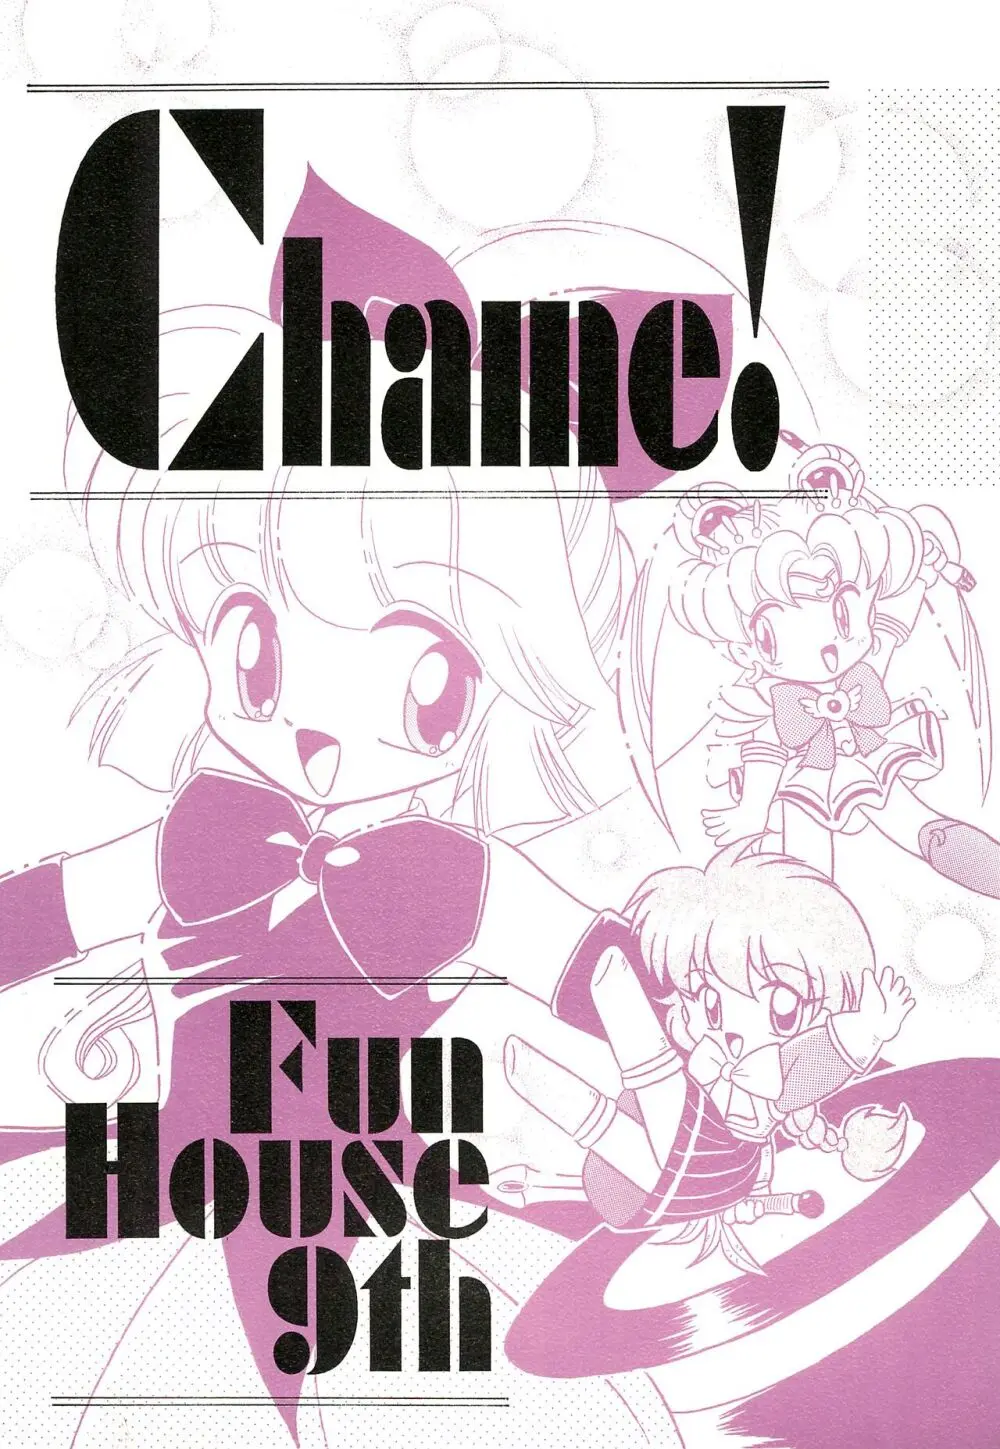 Fun House 9th Chame! 1ページ